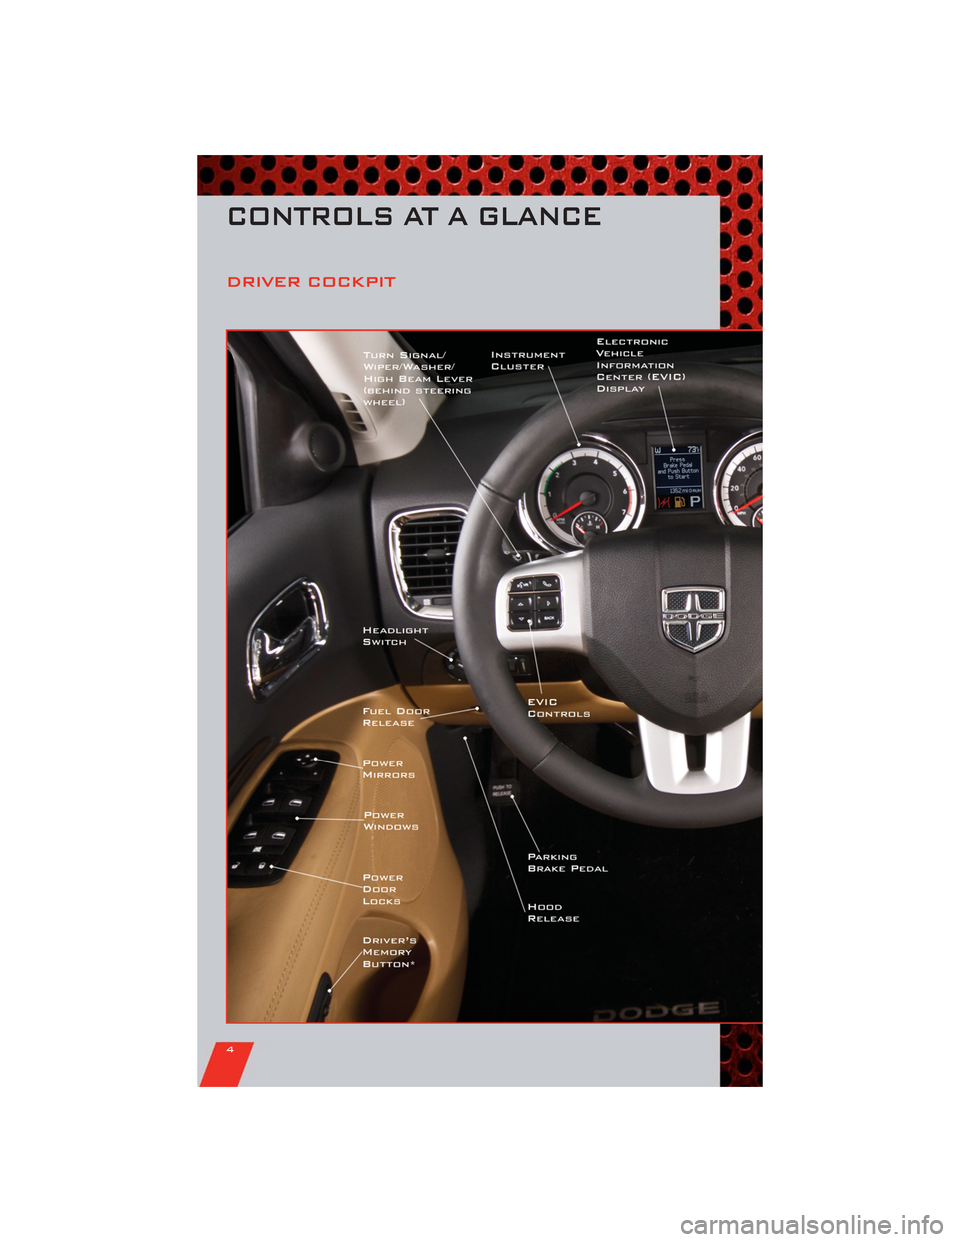 DODGE DURANGO 2011 3.G User Guide DRIVER COCKPIT
CONTROLS AT A GLANCE
4 